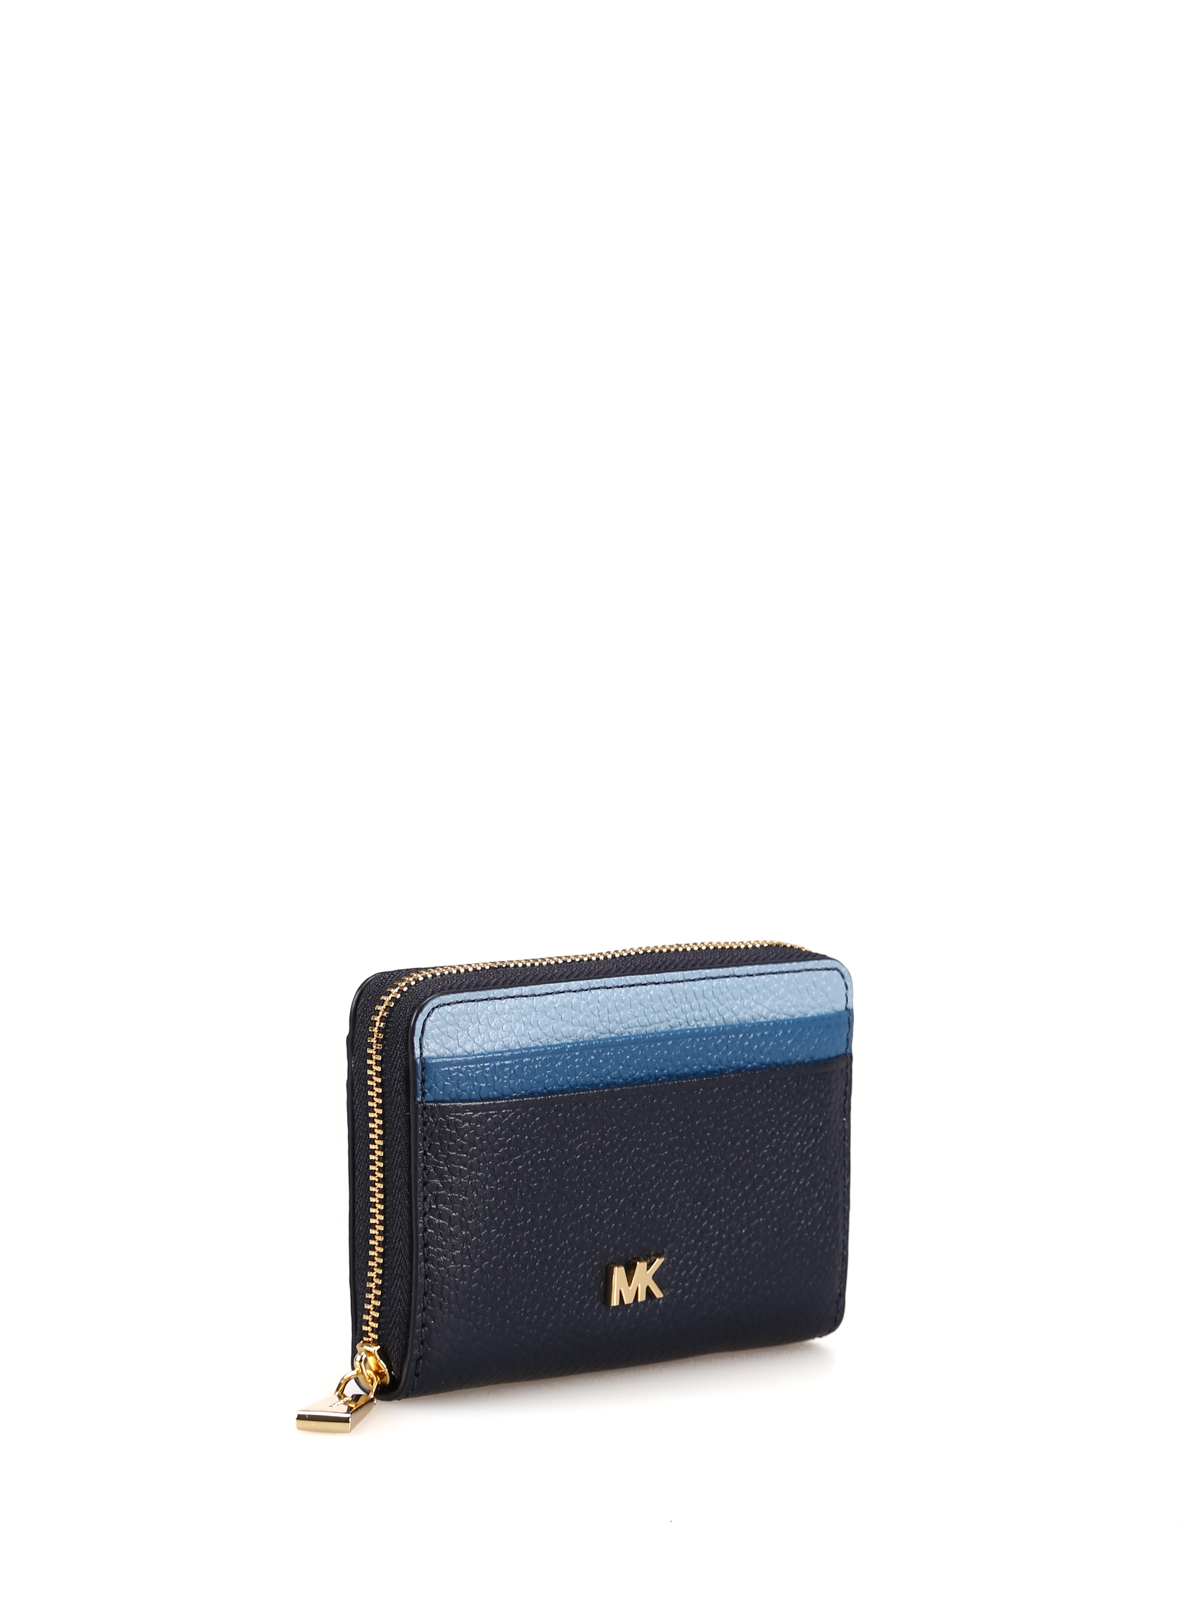 Michael Kors, Bags, Michael Kors Wallet Blue